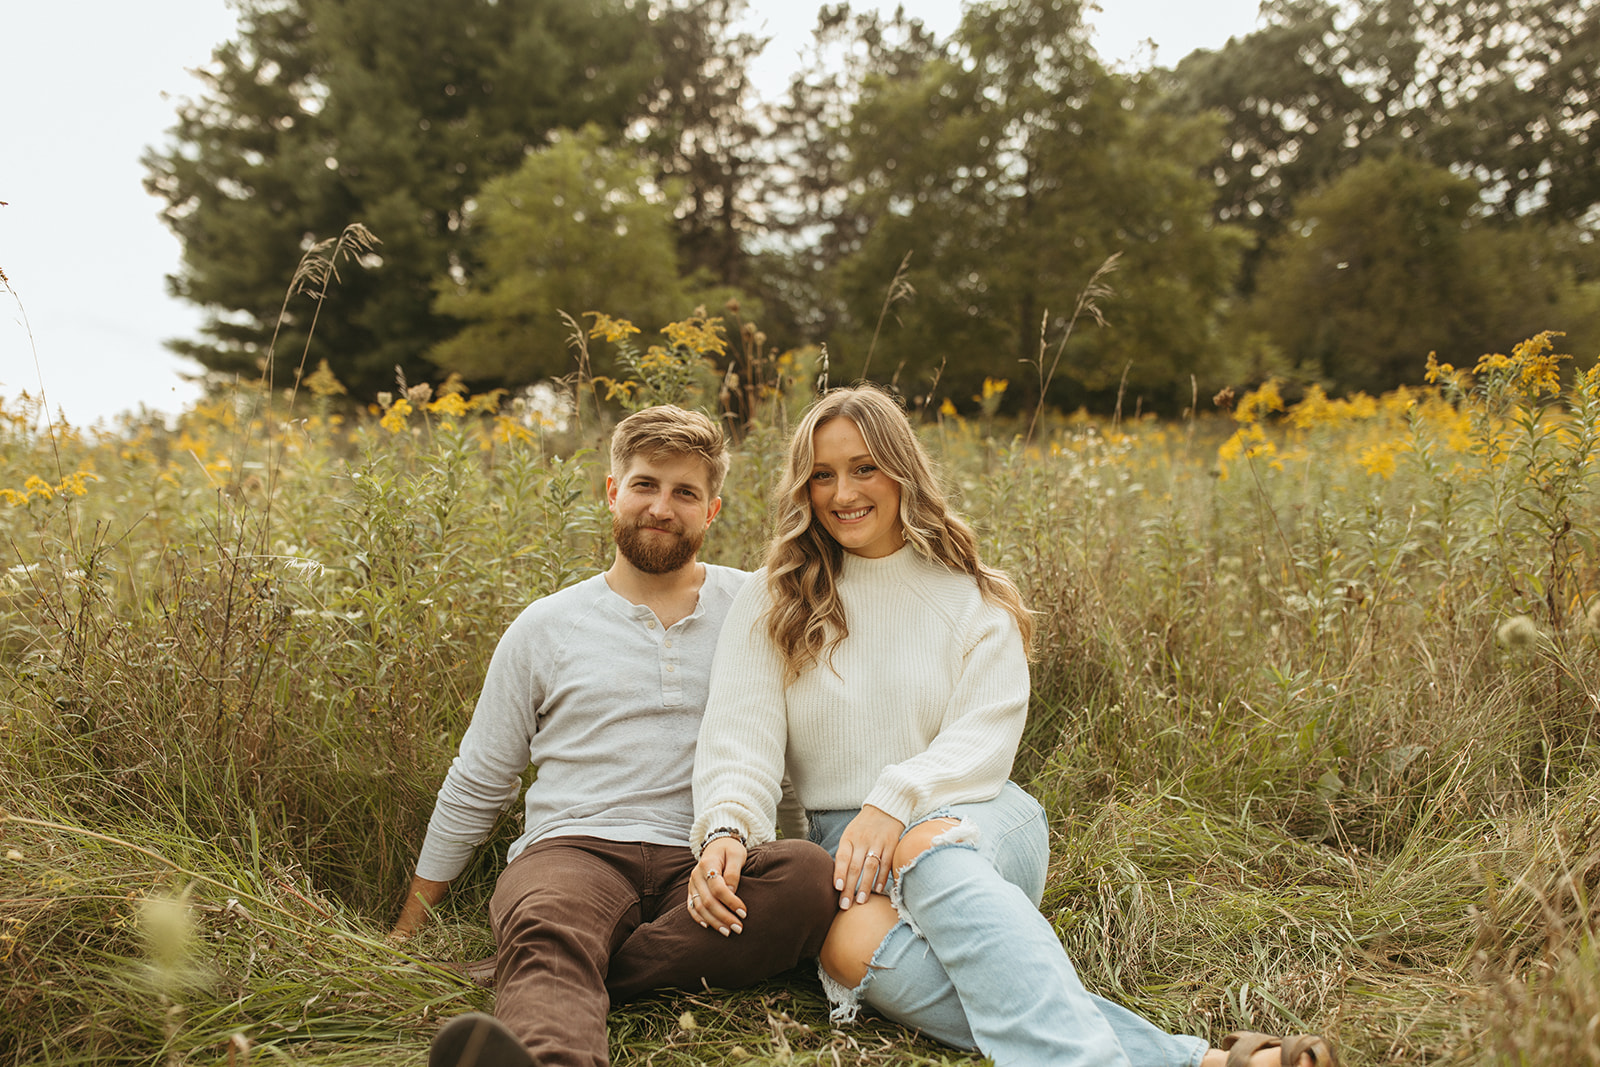 Couples engagement photos with their wedding photographer - Marissa Dillon Photography at Matthaei Botanical Gardens & Nichols Arboretum